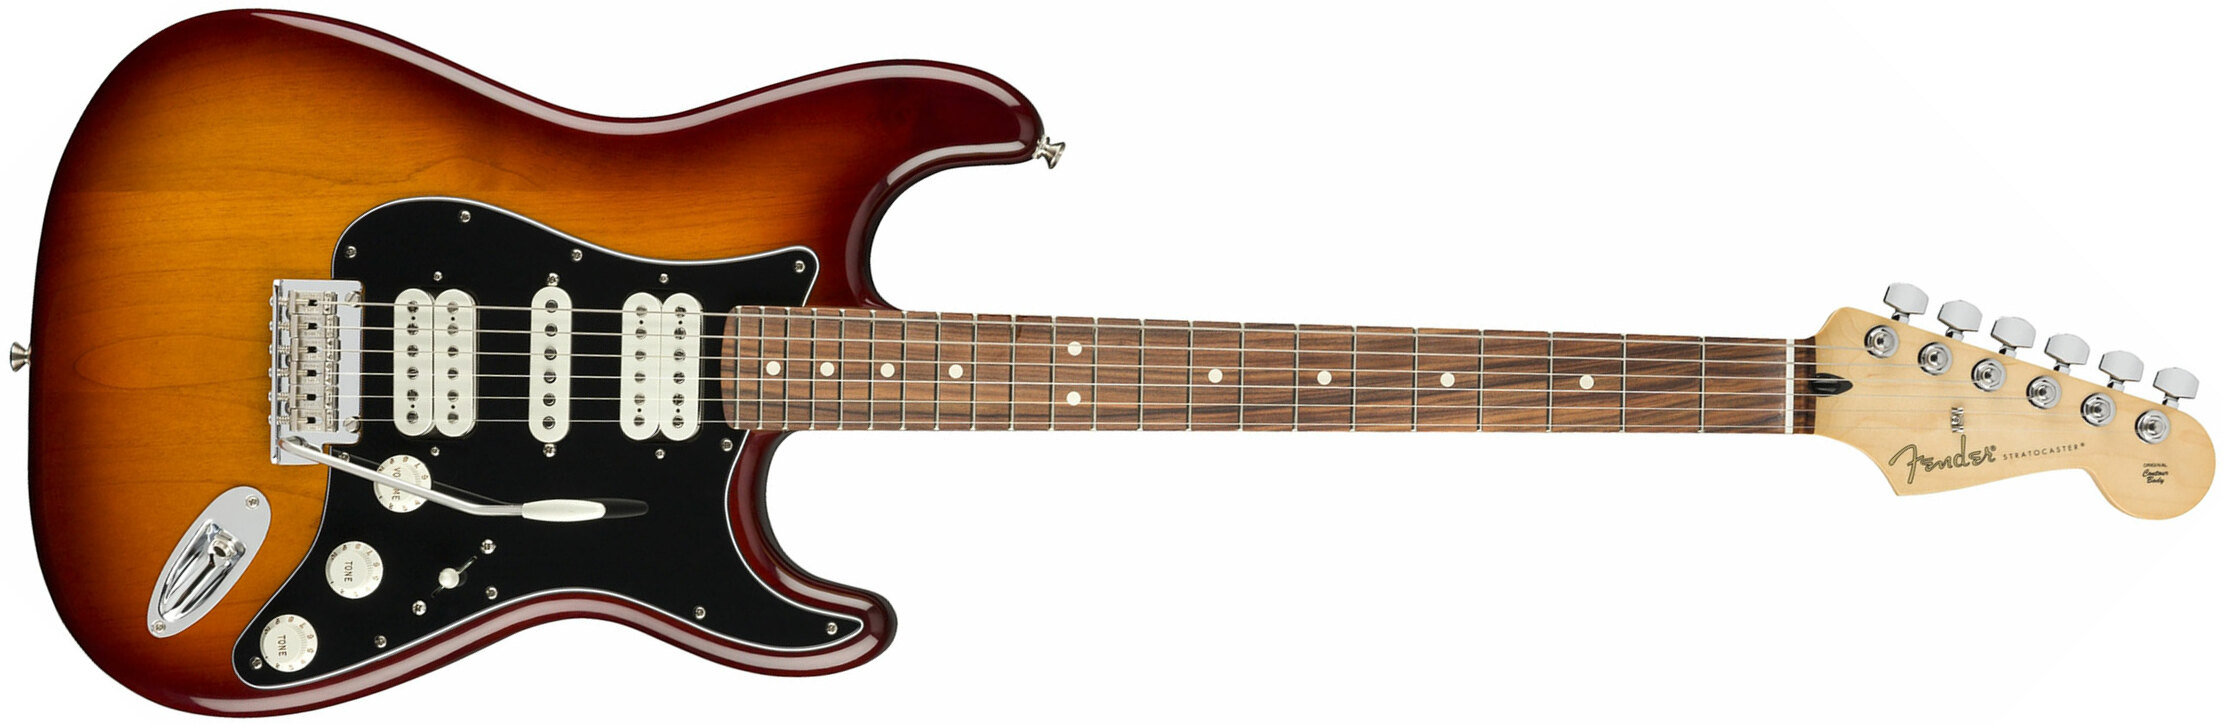 Fender Strat Player Mex Hsh Pf - Tobacco Burst - E-Gitarre in Str-Form - Main picture